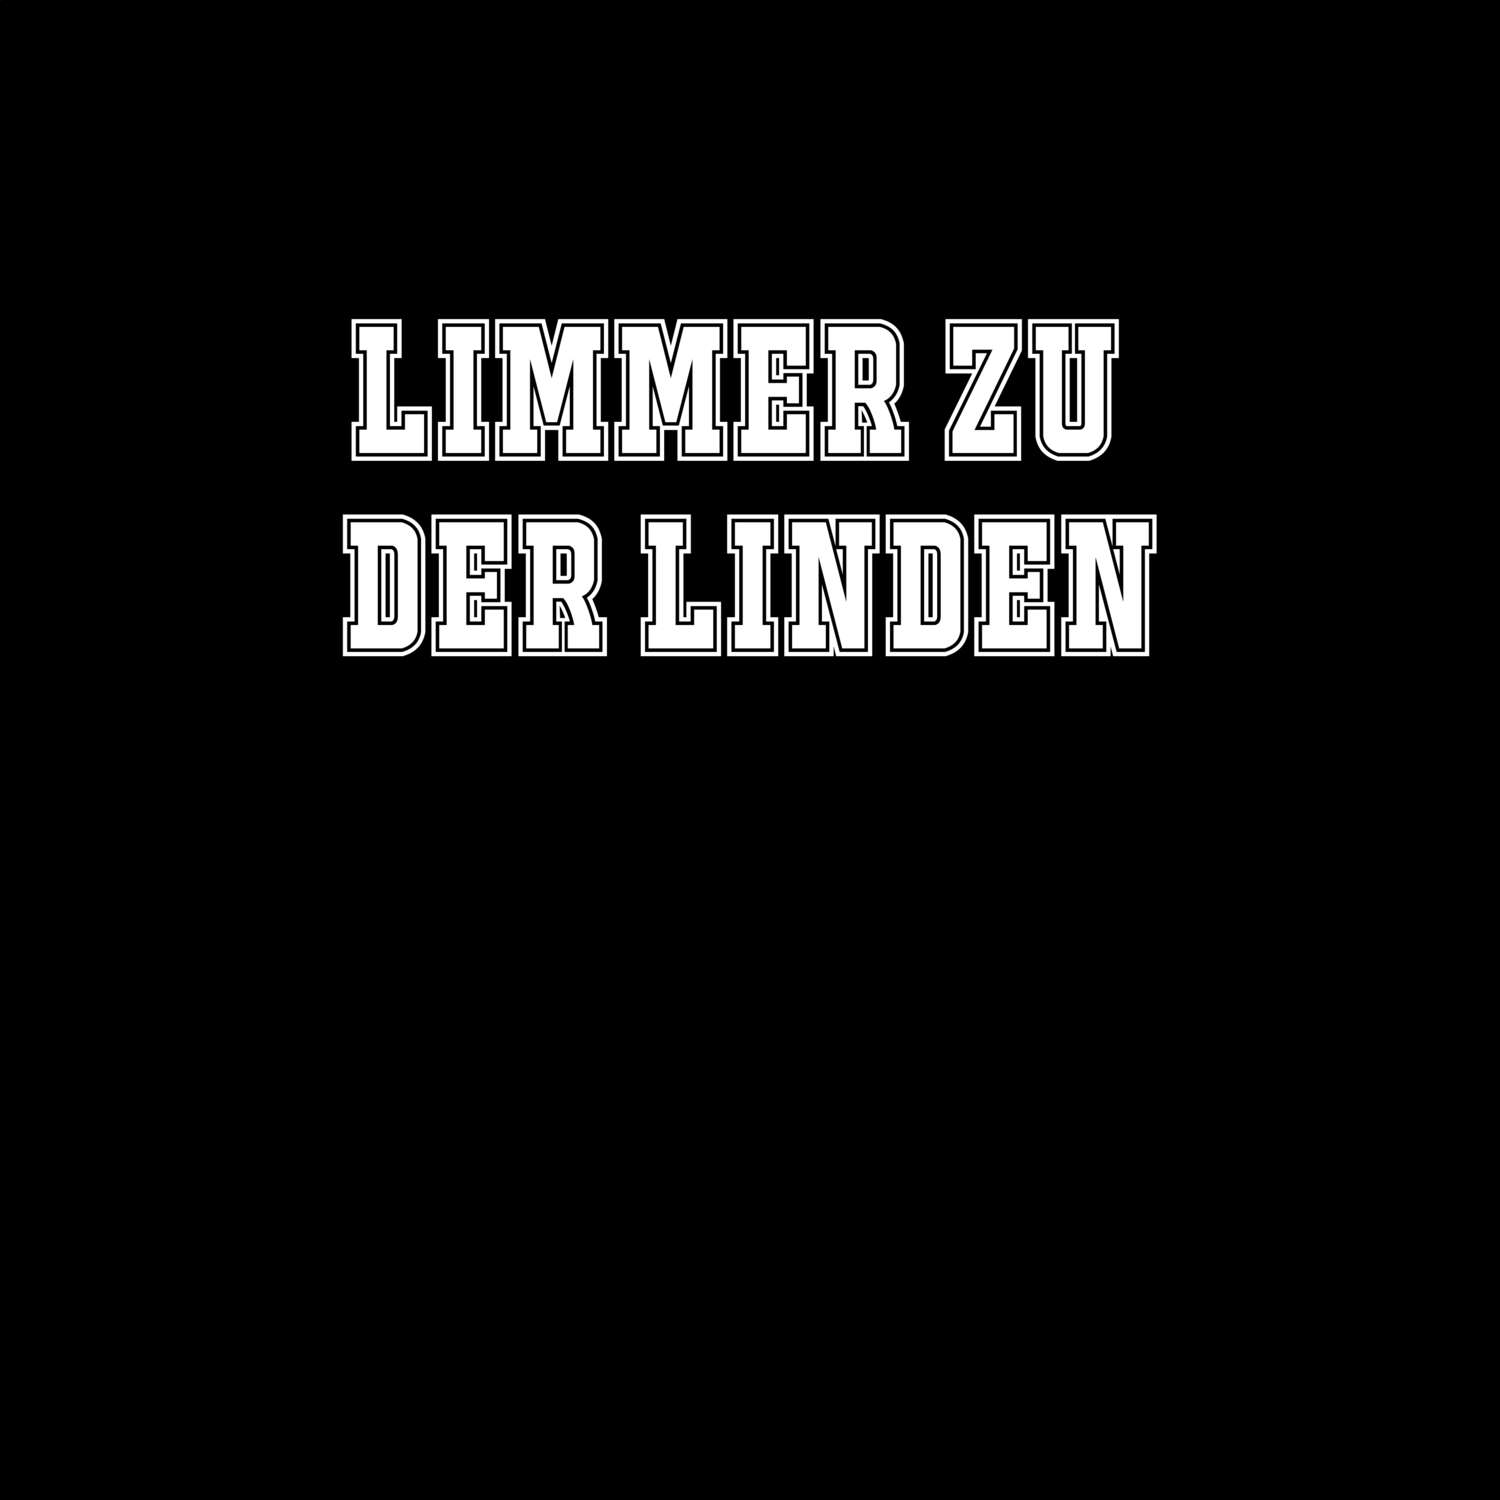 Limmer zu der Linden T-Shirt »Classic«